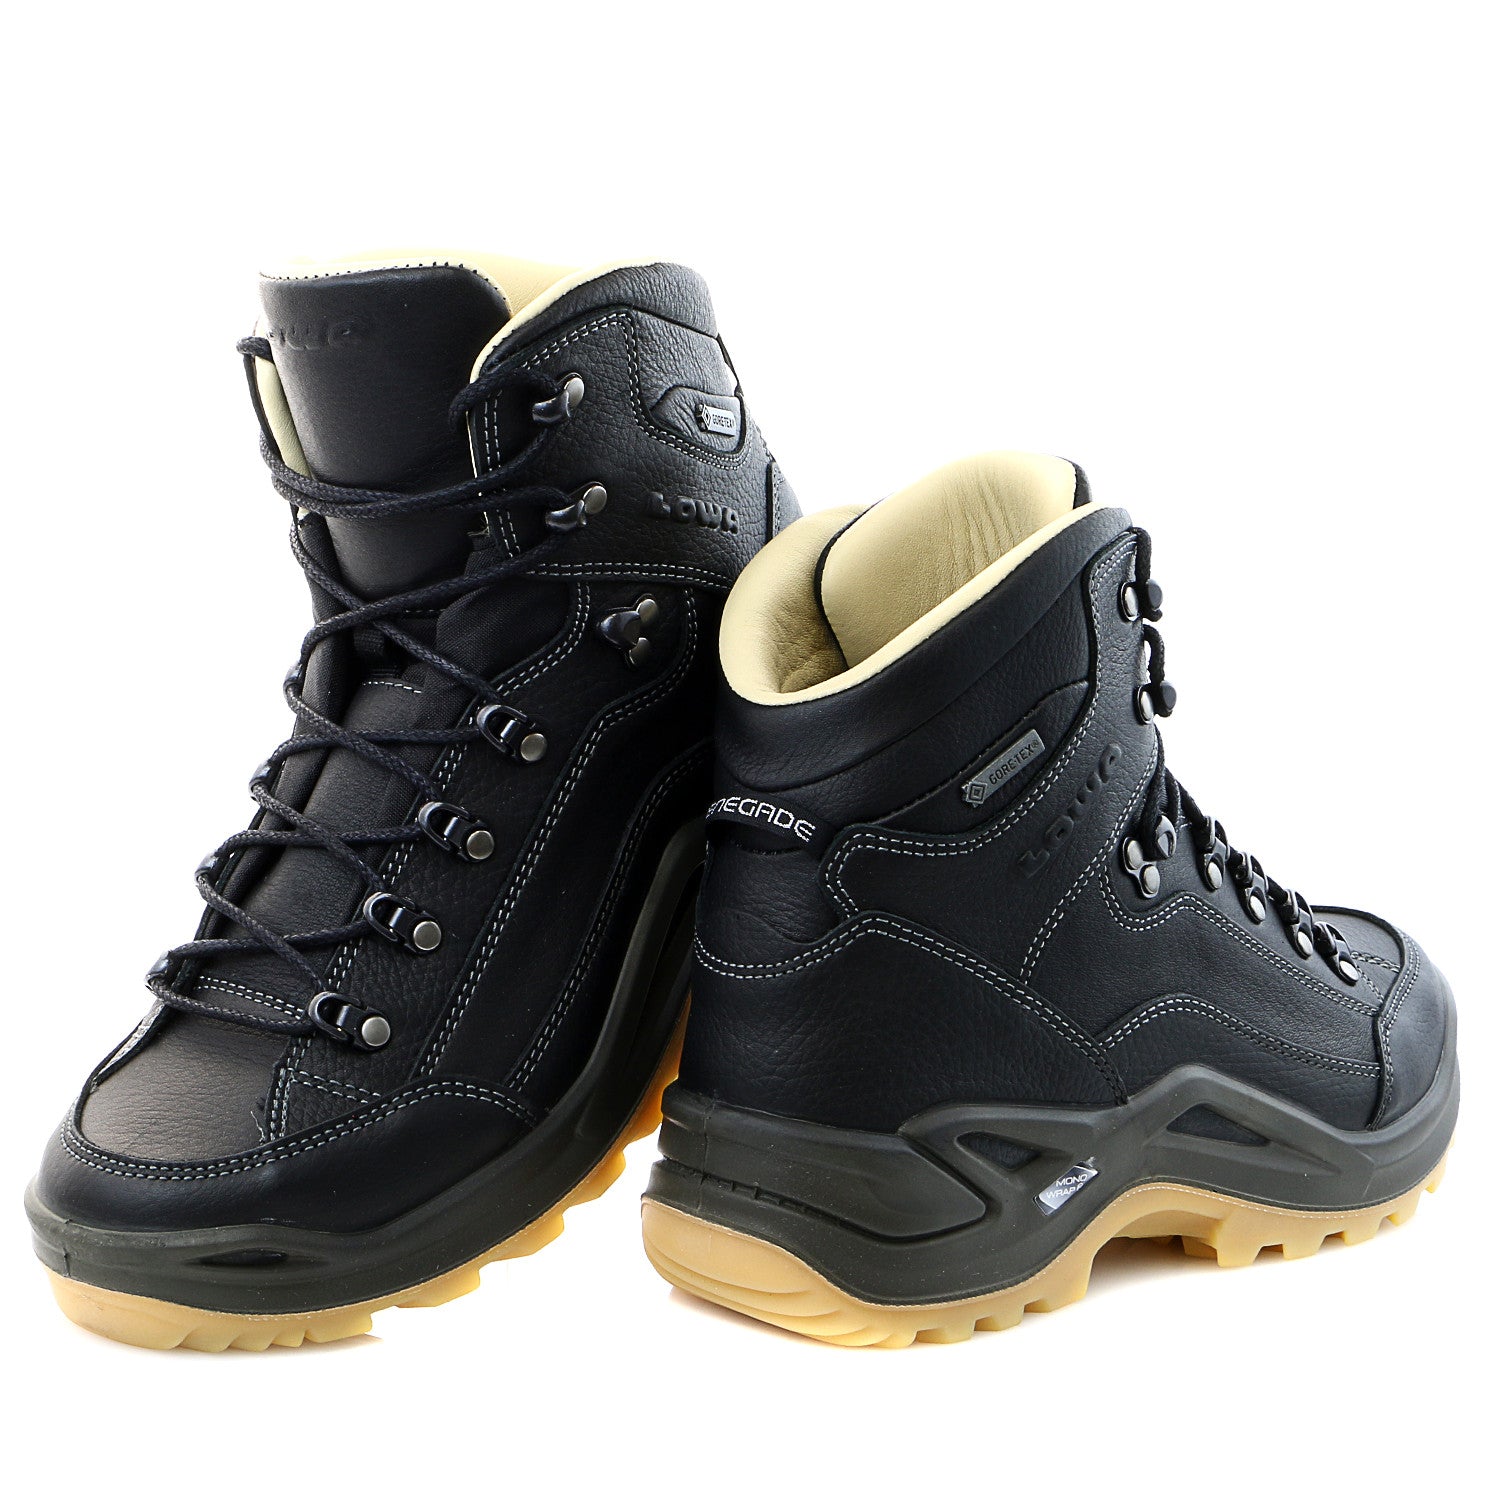 toenemen fout Beroep Lowa Renegade DLX GTX Mid Hiking Boot - Men's - Shoplifestyle